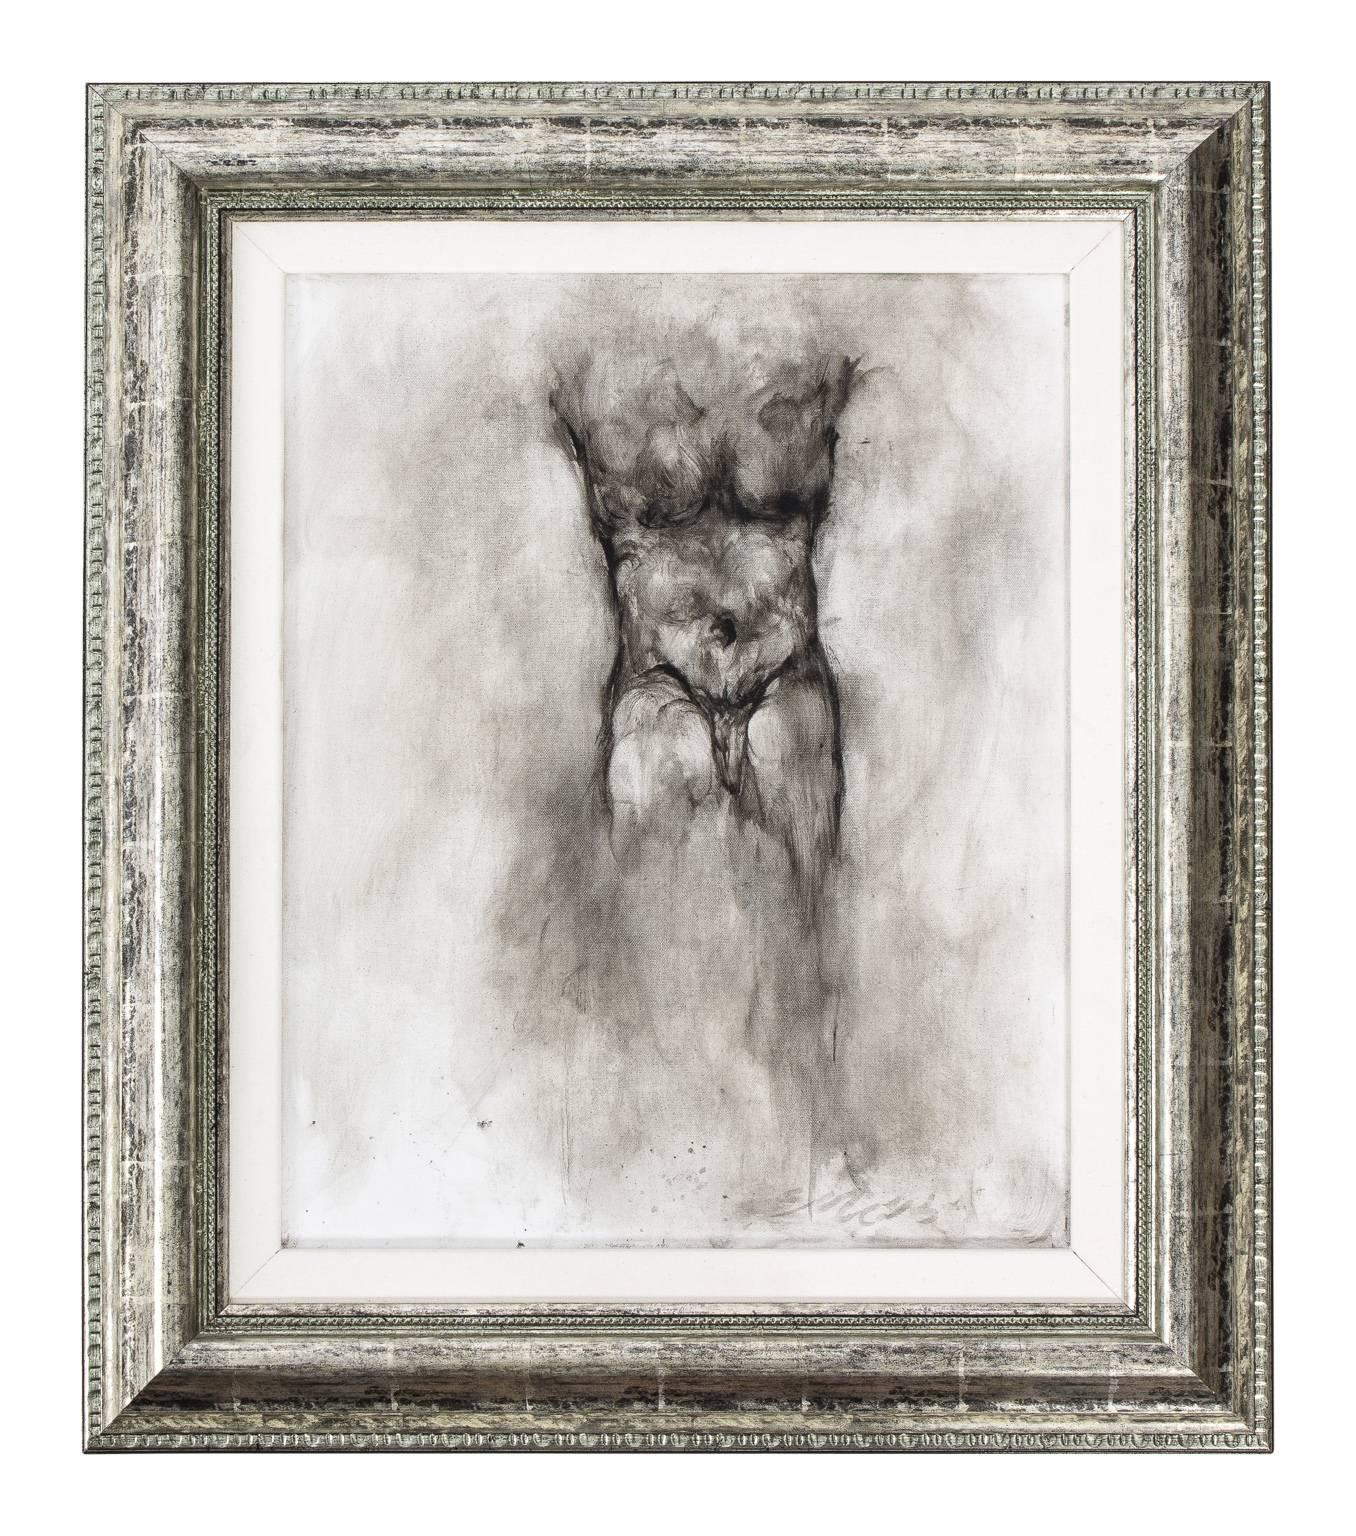 nude male drawings